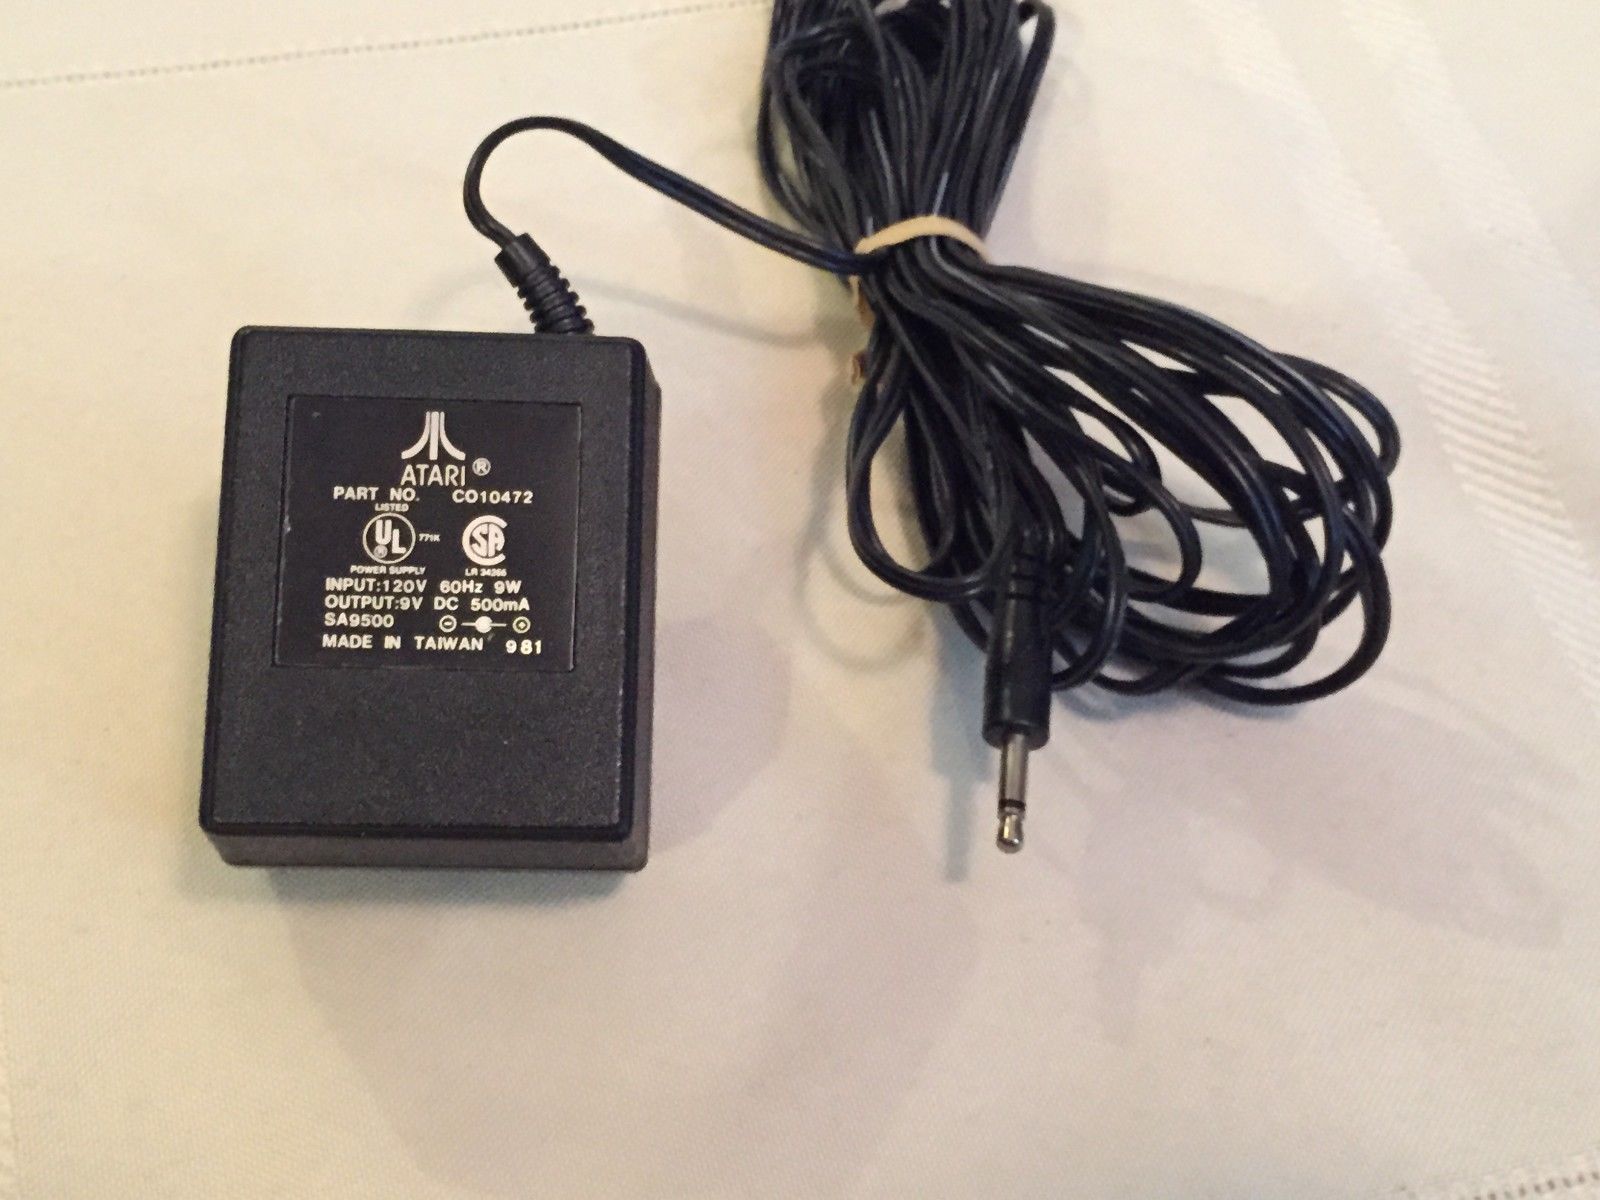 835 Modem Power Supply AC Adapter 20 VAC 8 watts Orig Atari CO60479 Tested 